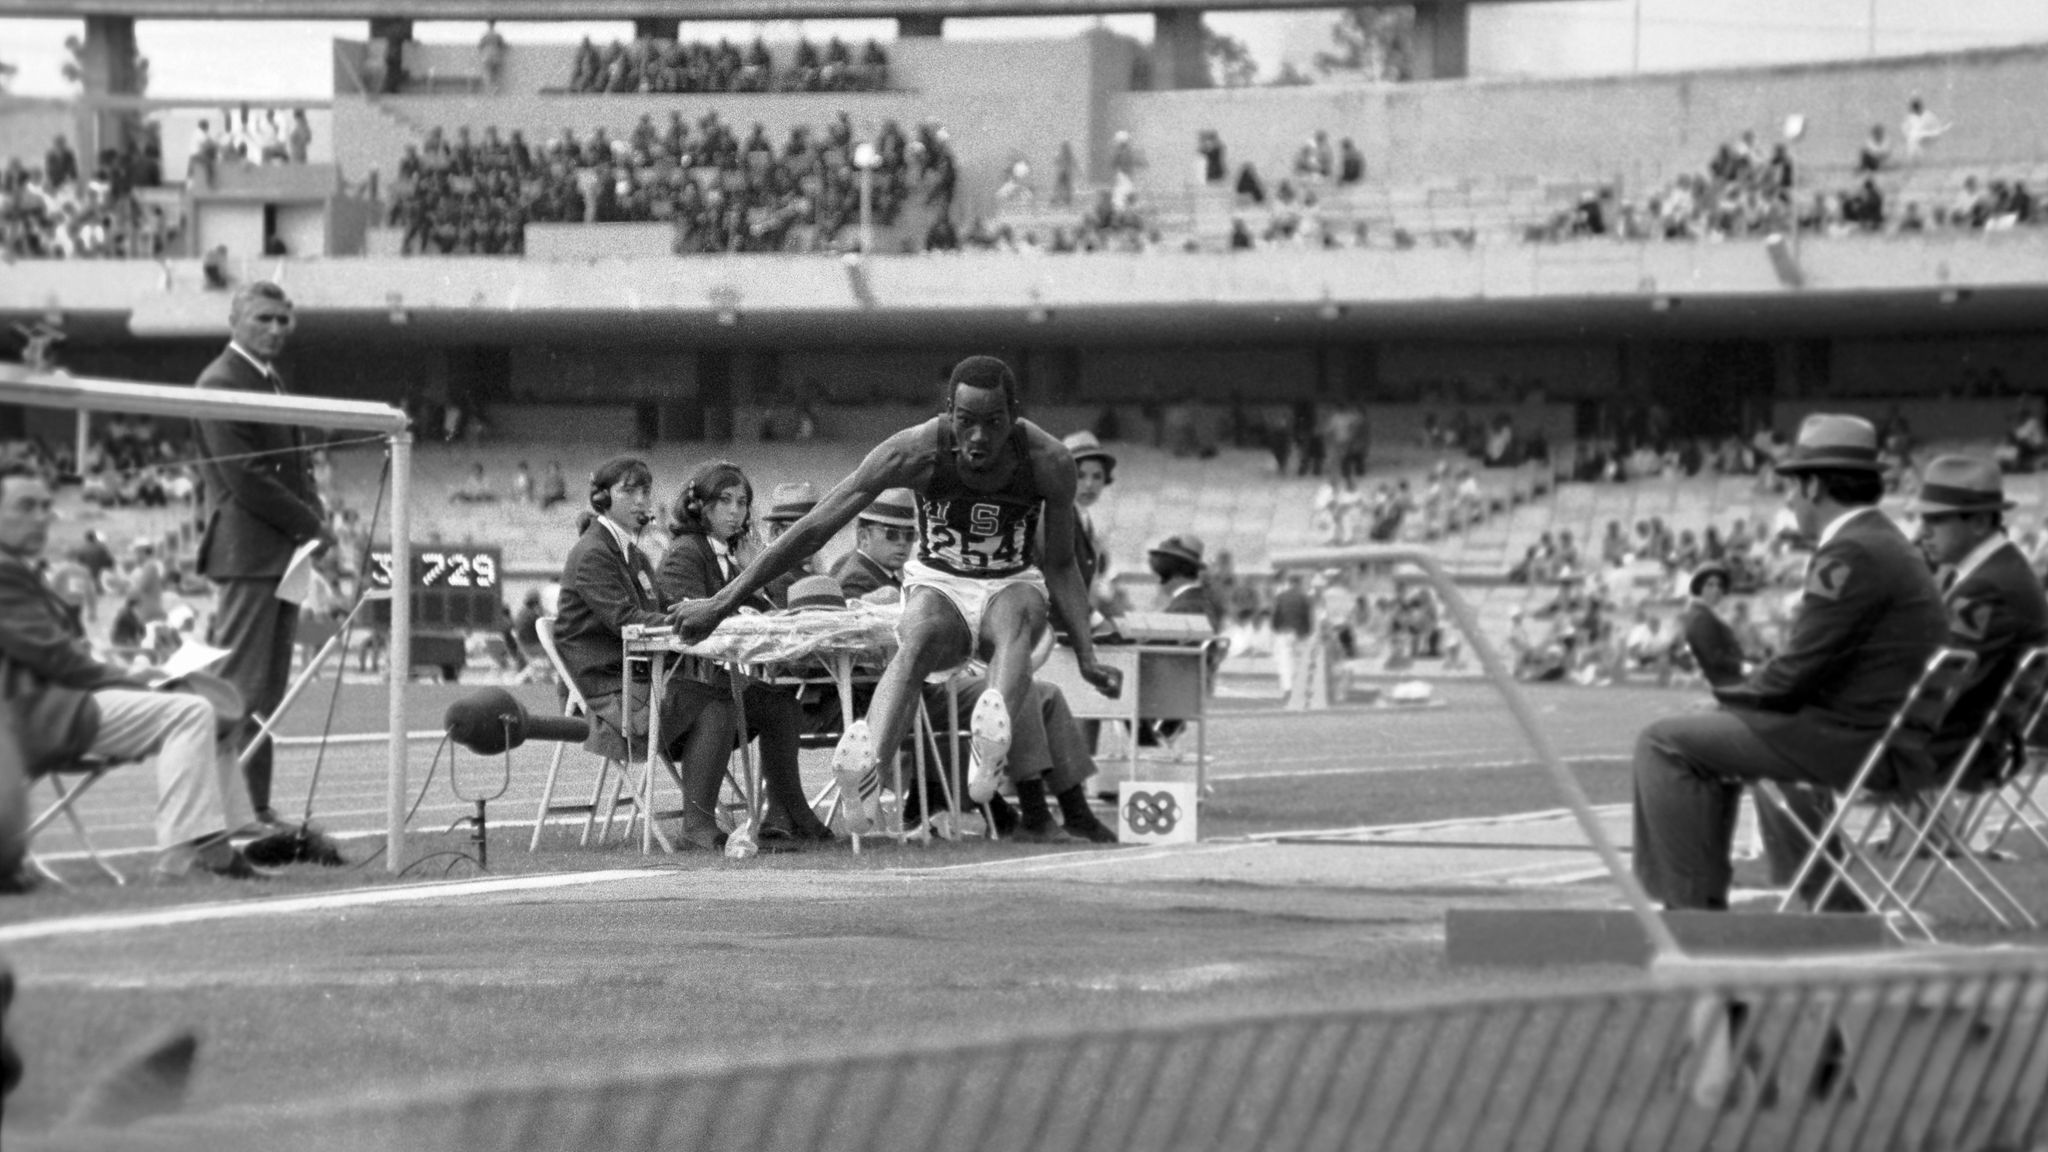 Bob Beamon: Olympic long jumper on incredible world record jump in